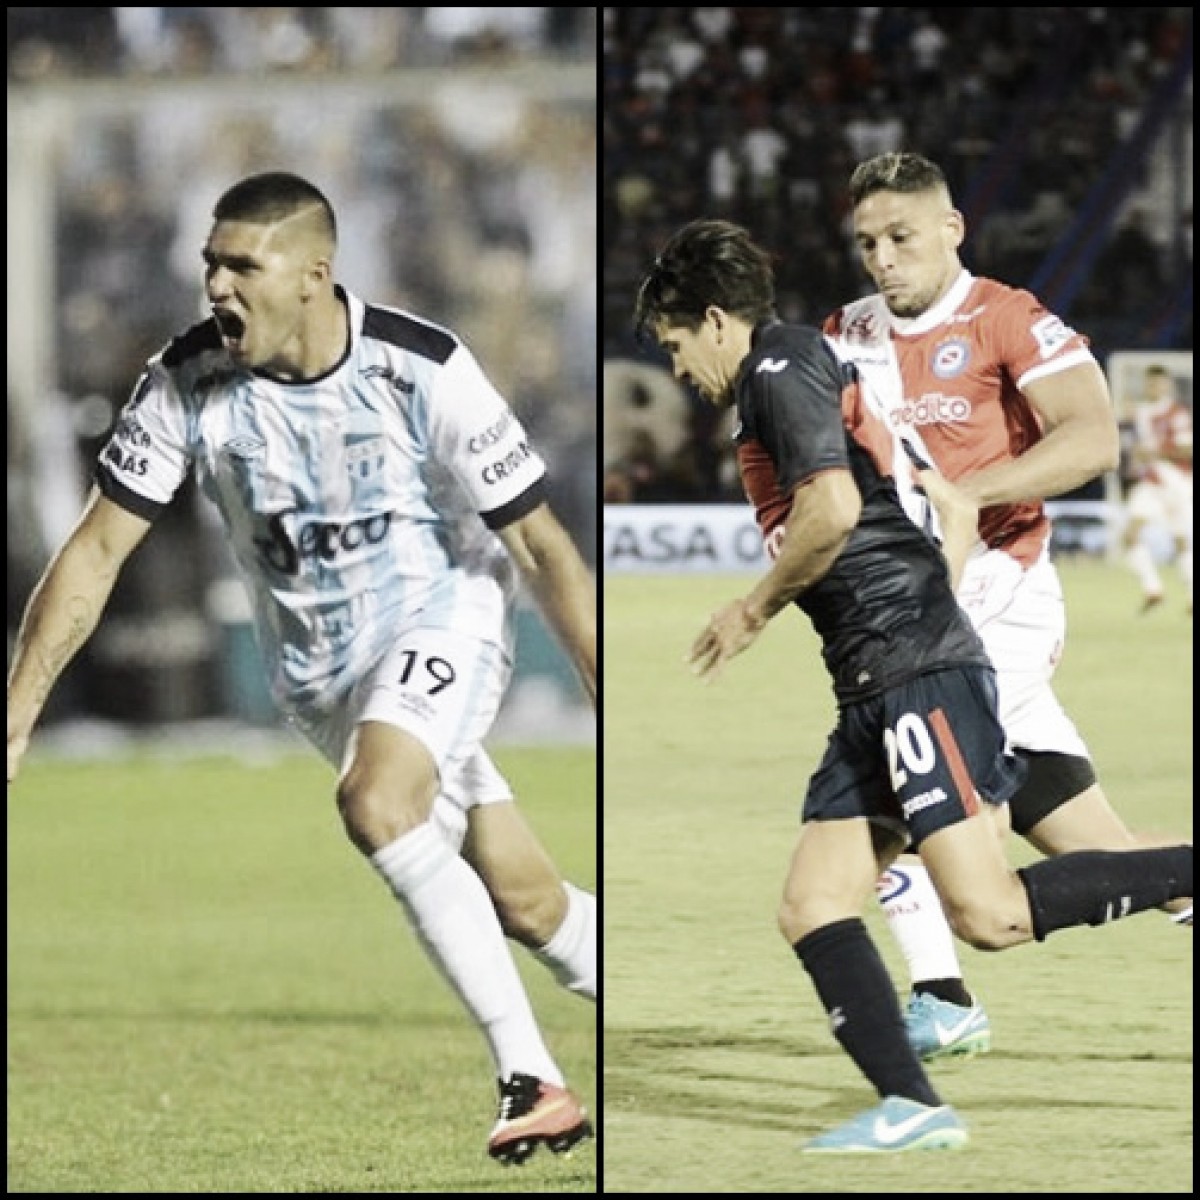 Cara a Cara: David Barbona vs Diego Morales